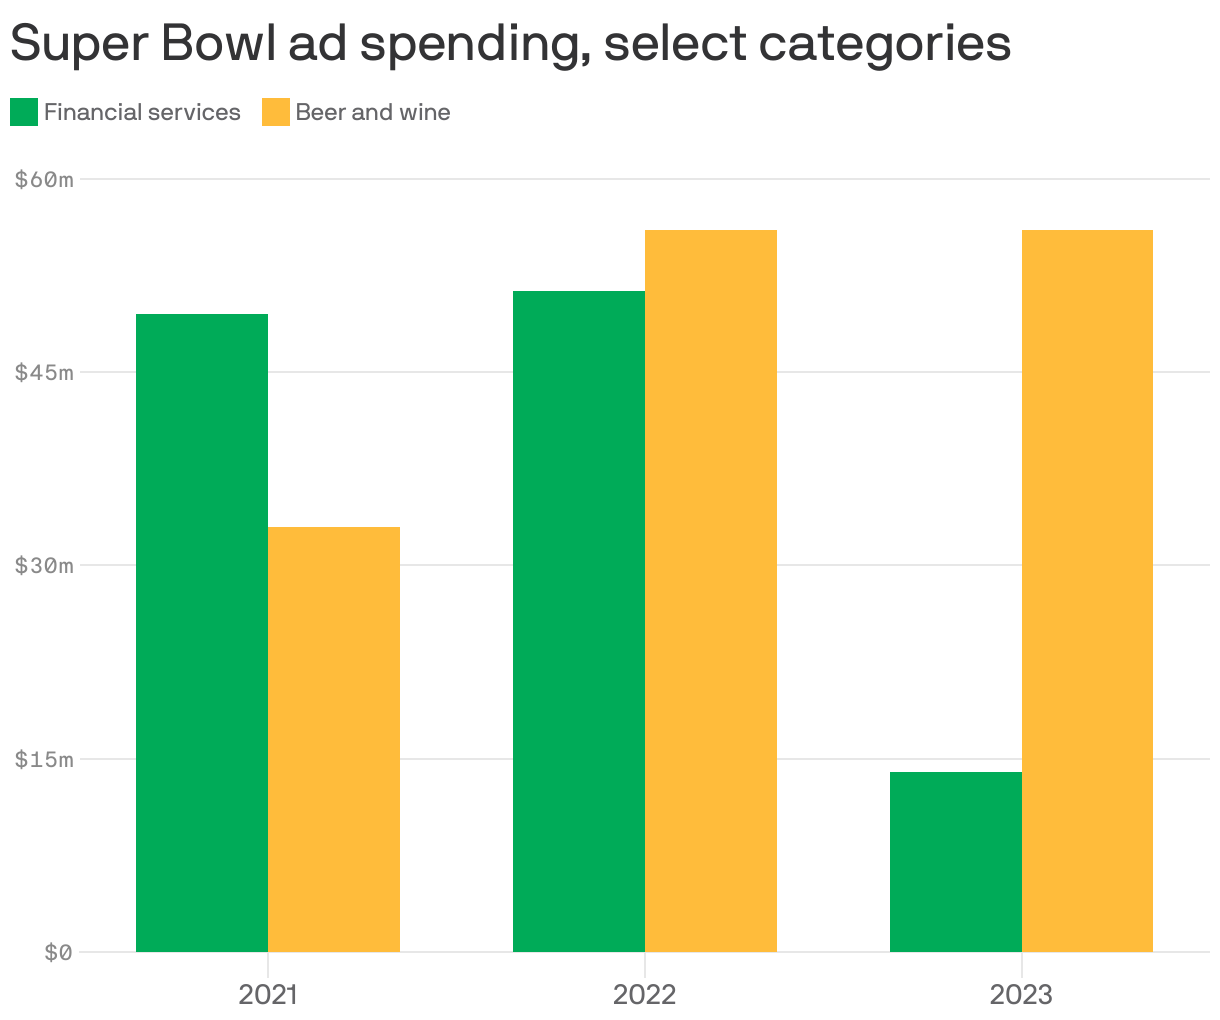 Super Bowl ad spending, select categories